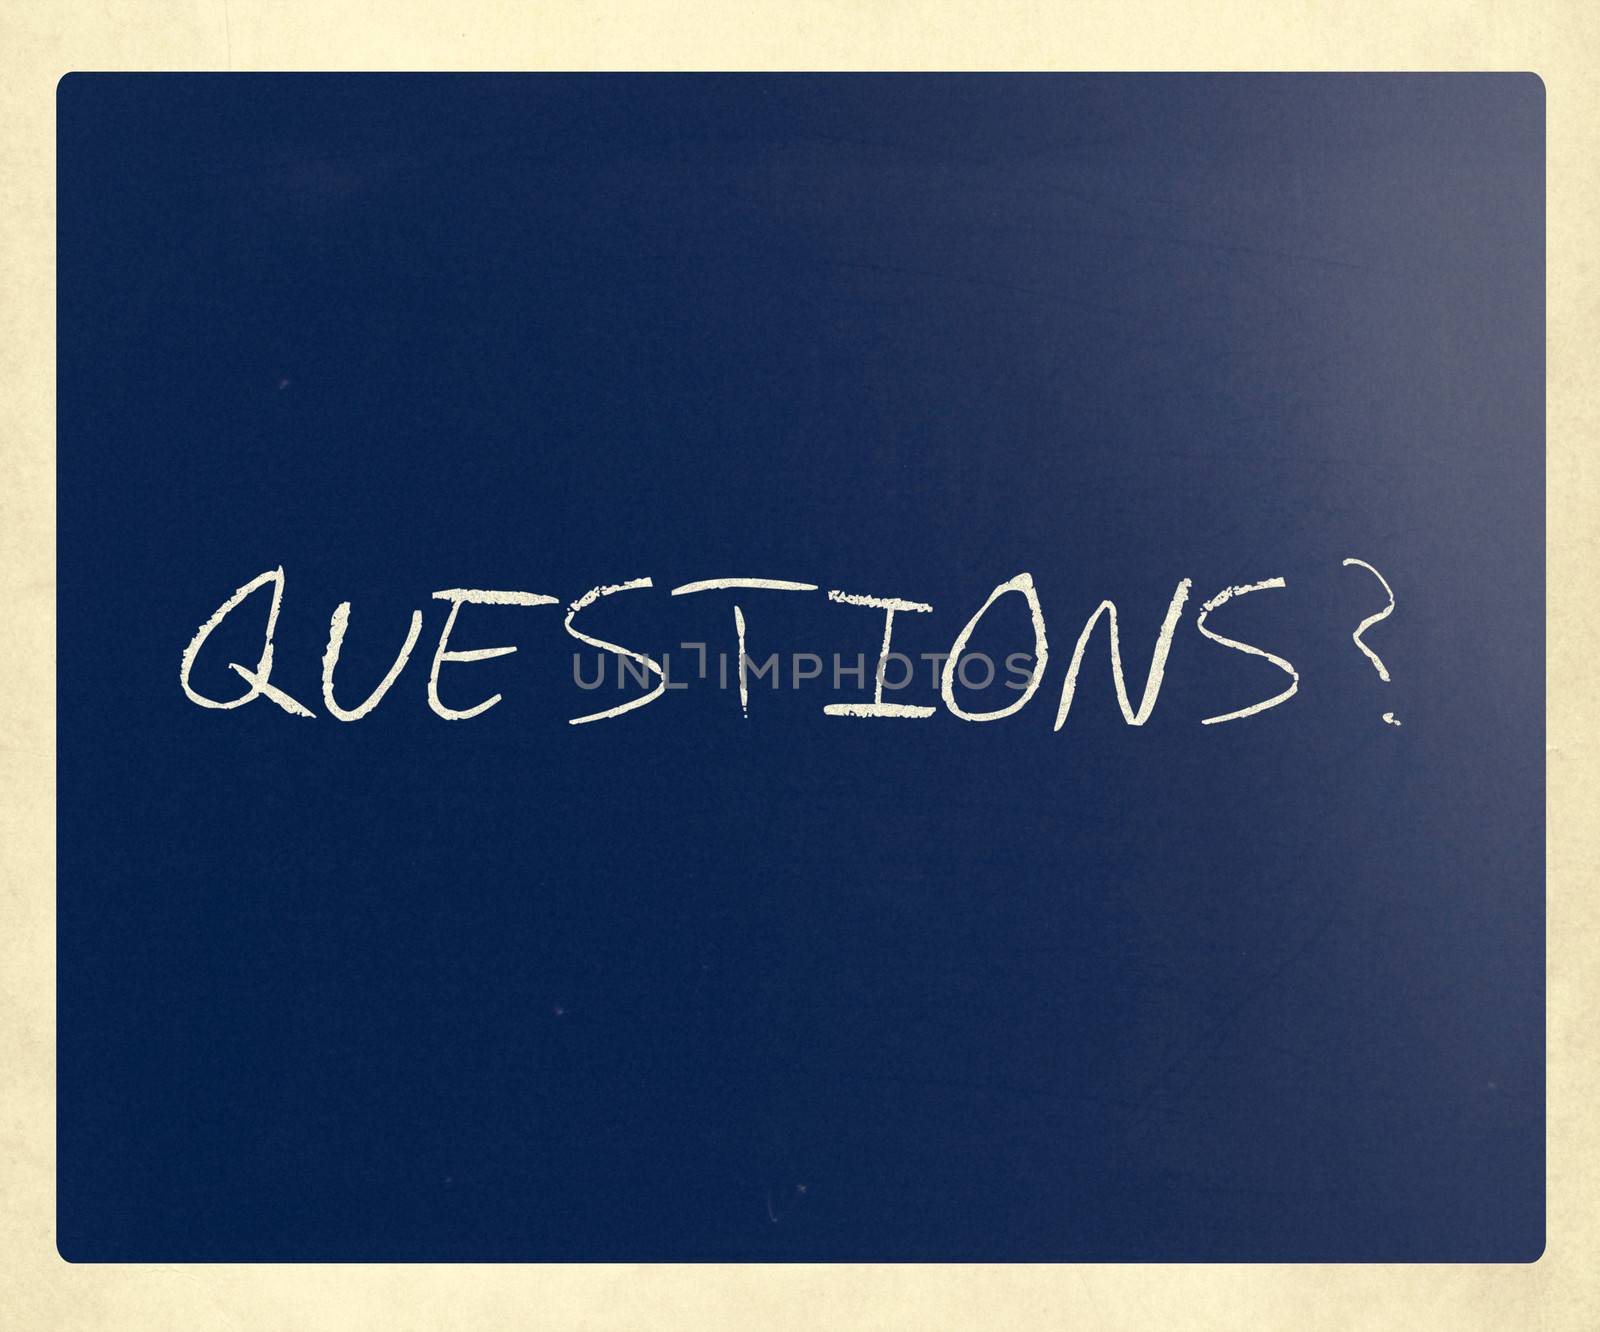 "Questions?" handwritten with white chalk on a blackboard by nenov